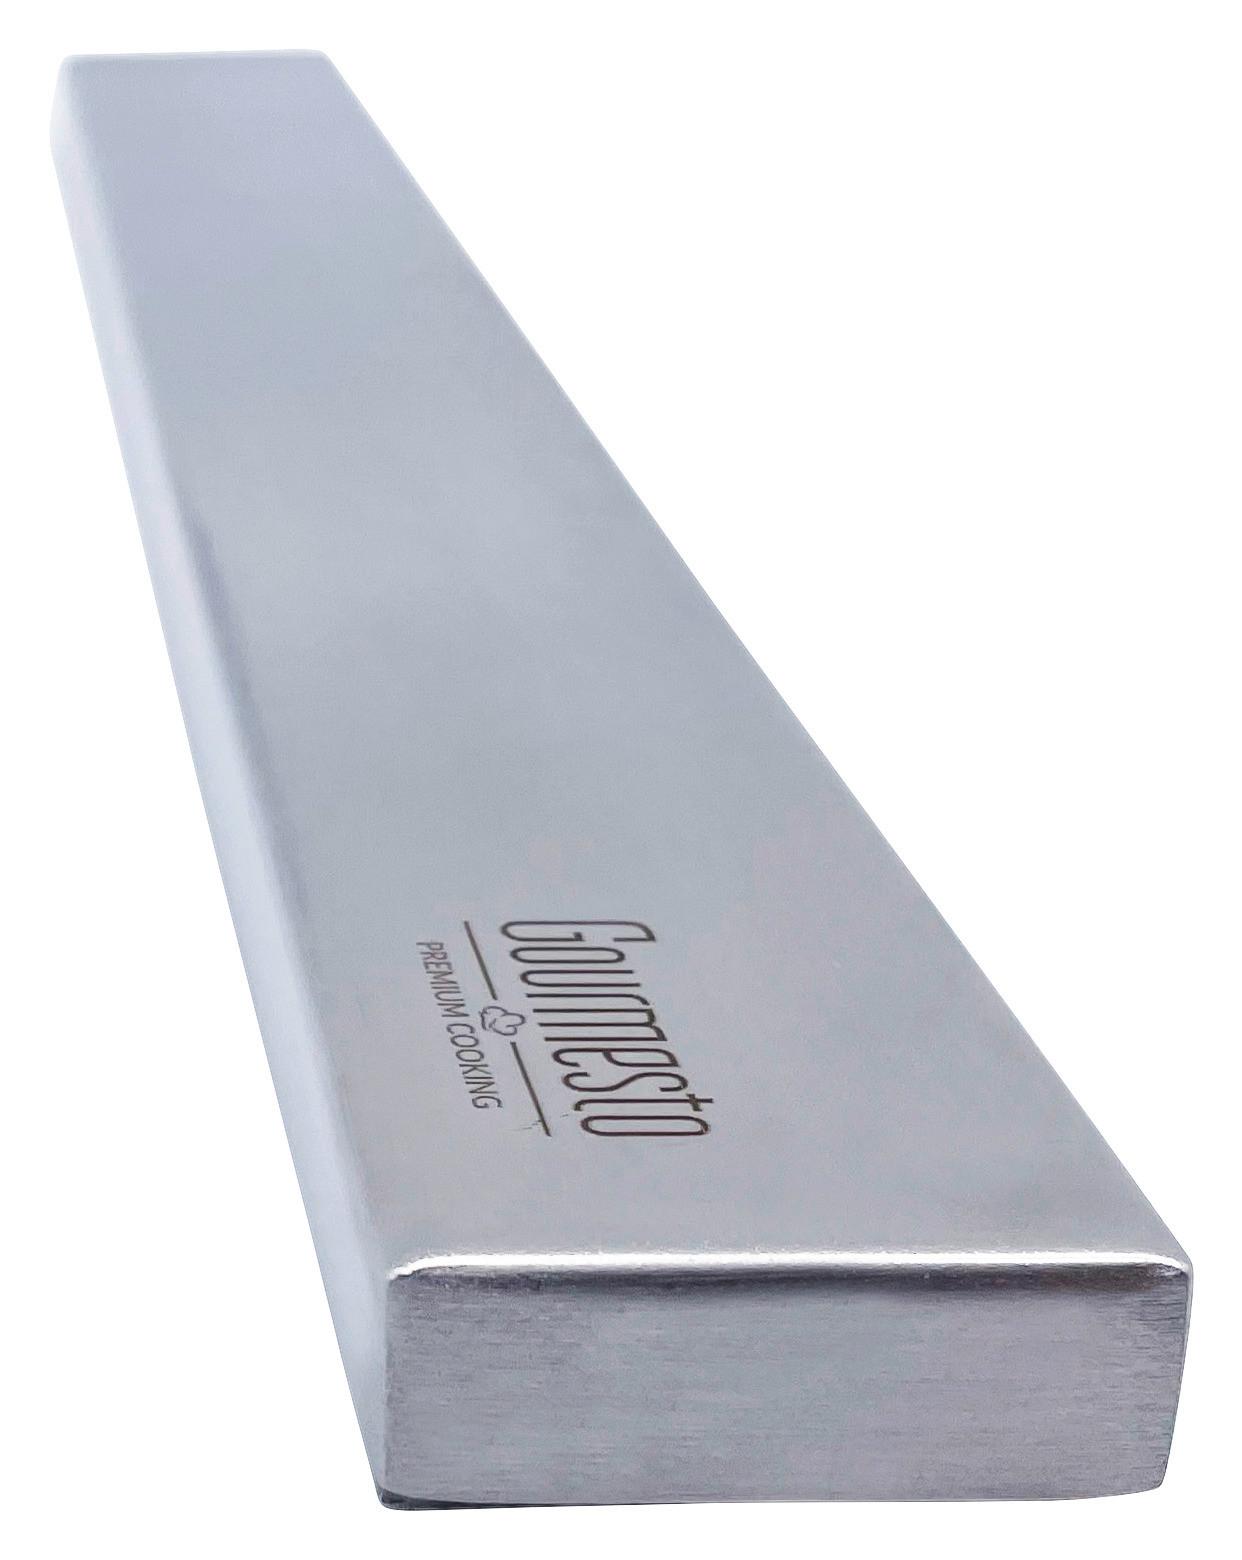 Magnetická Lišta Profi Line, 40cm - barvy stříbra, Moderní, kov (40/4,5/1,7cm) - Gourmesto